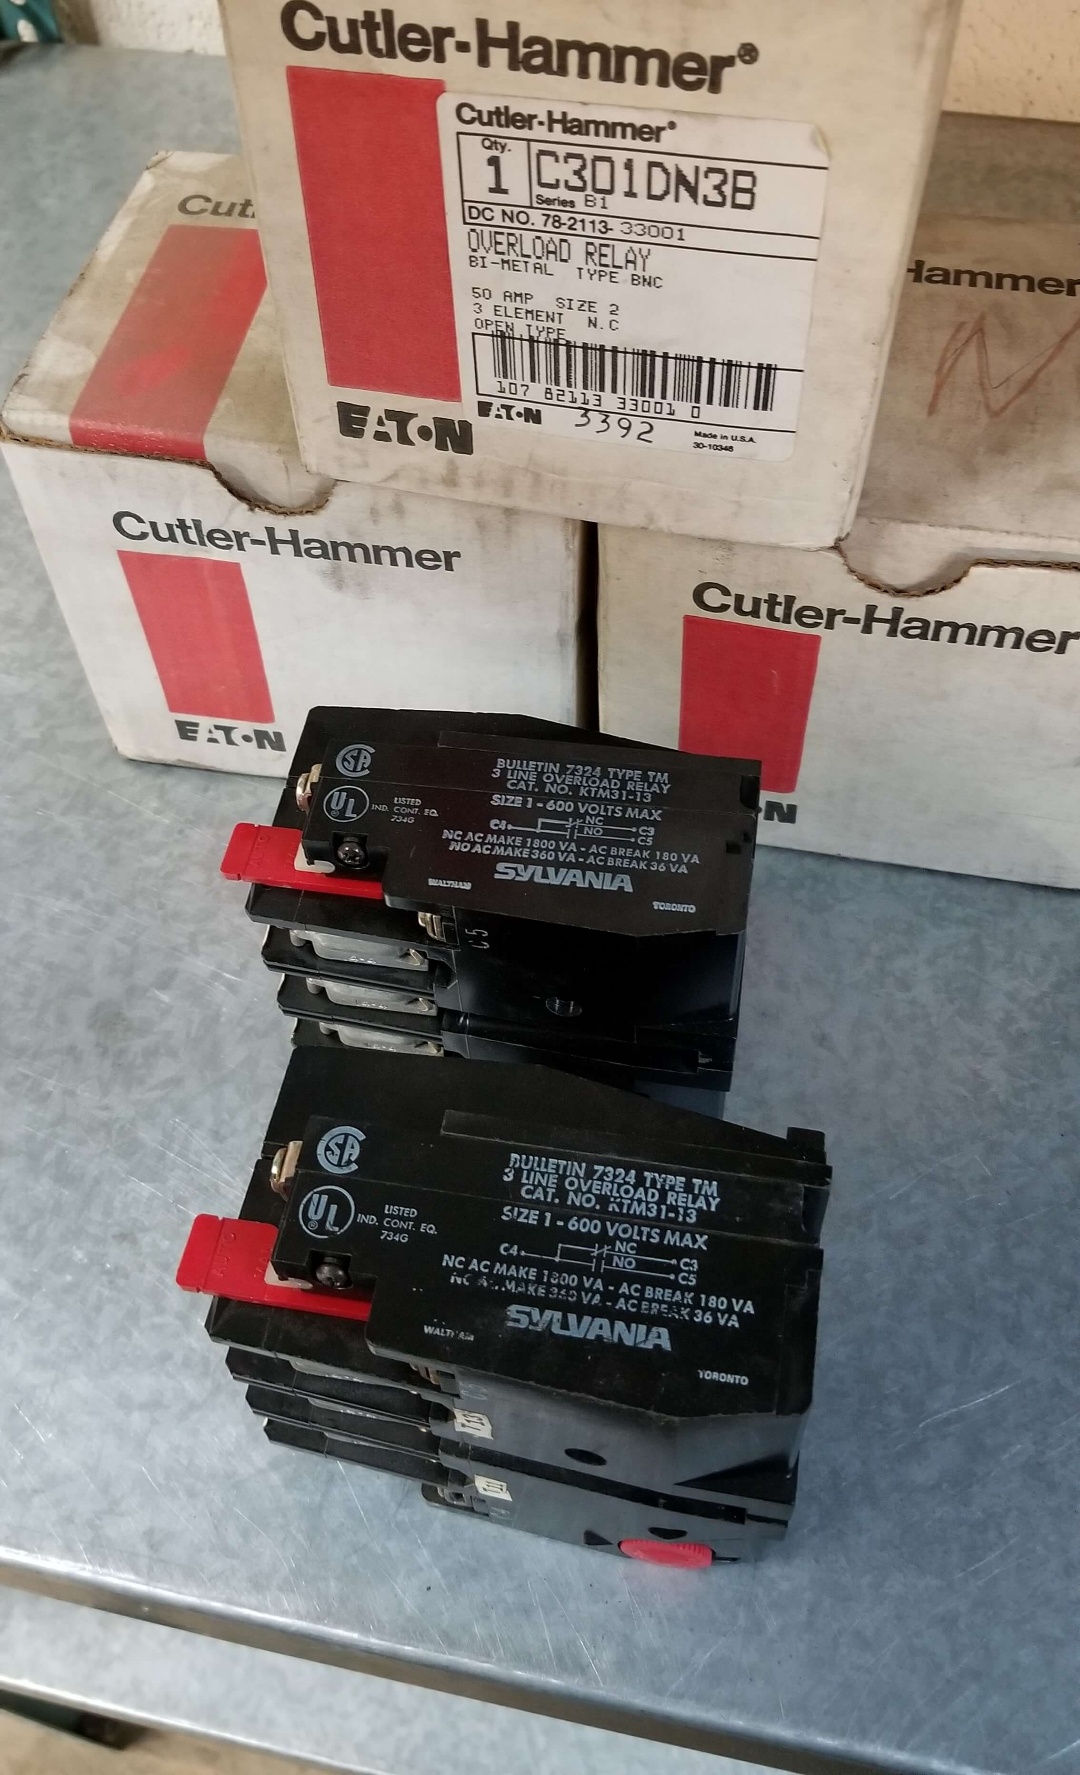 Cutler-Hammer Overload Relay
P/N: C301DN3B
$300.00